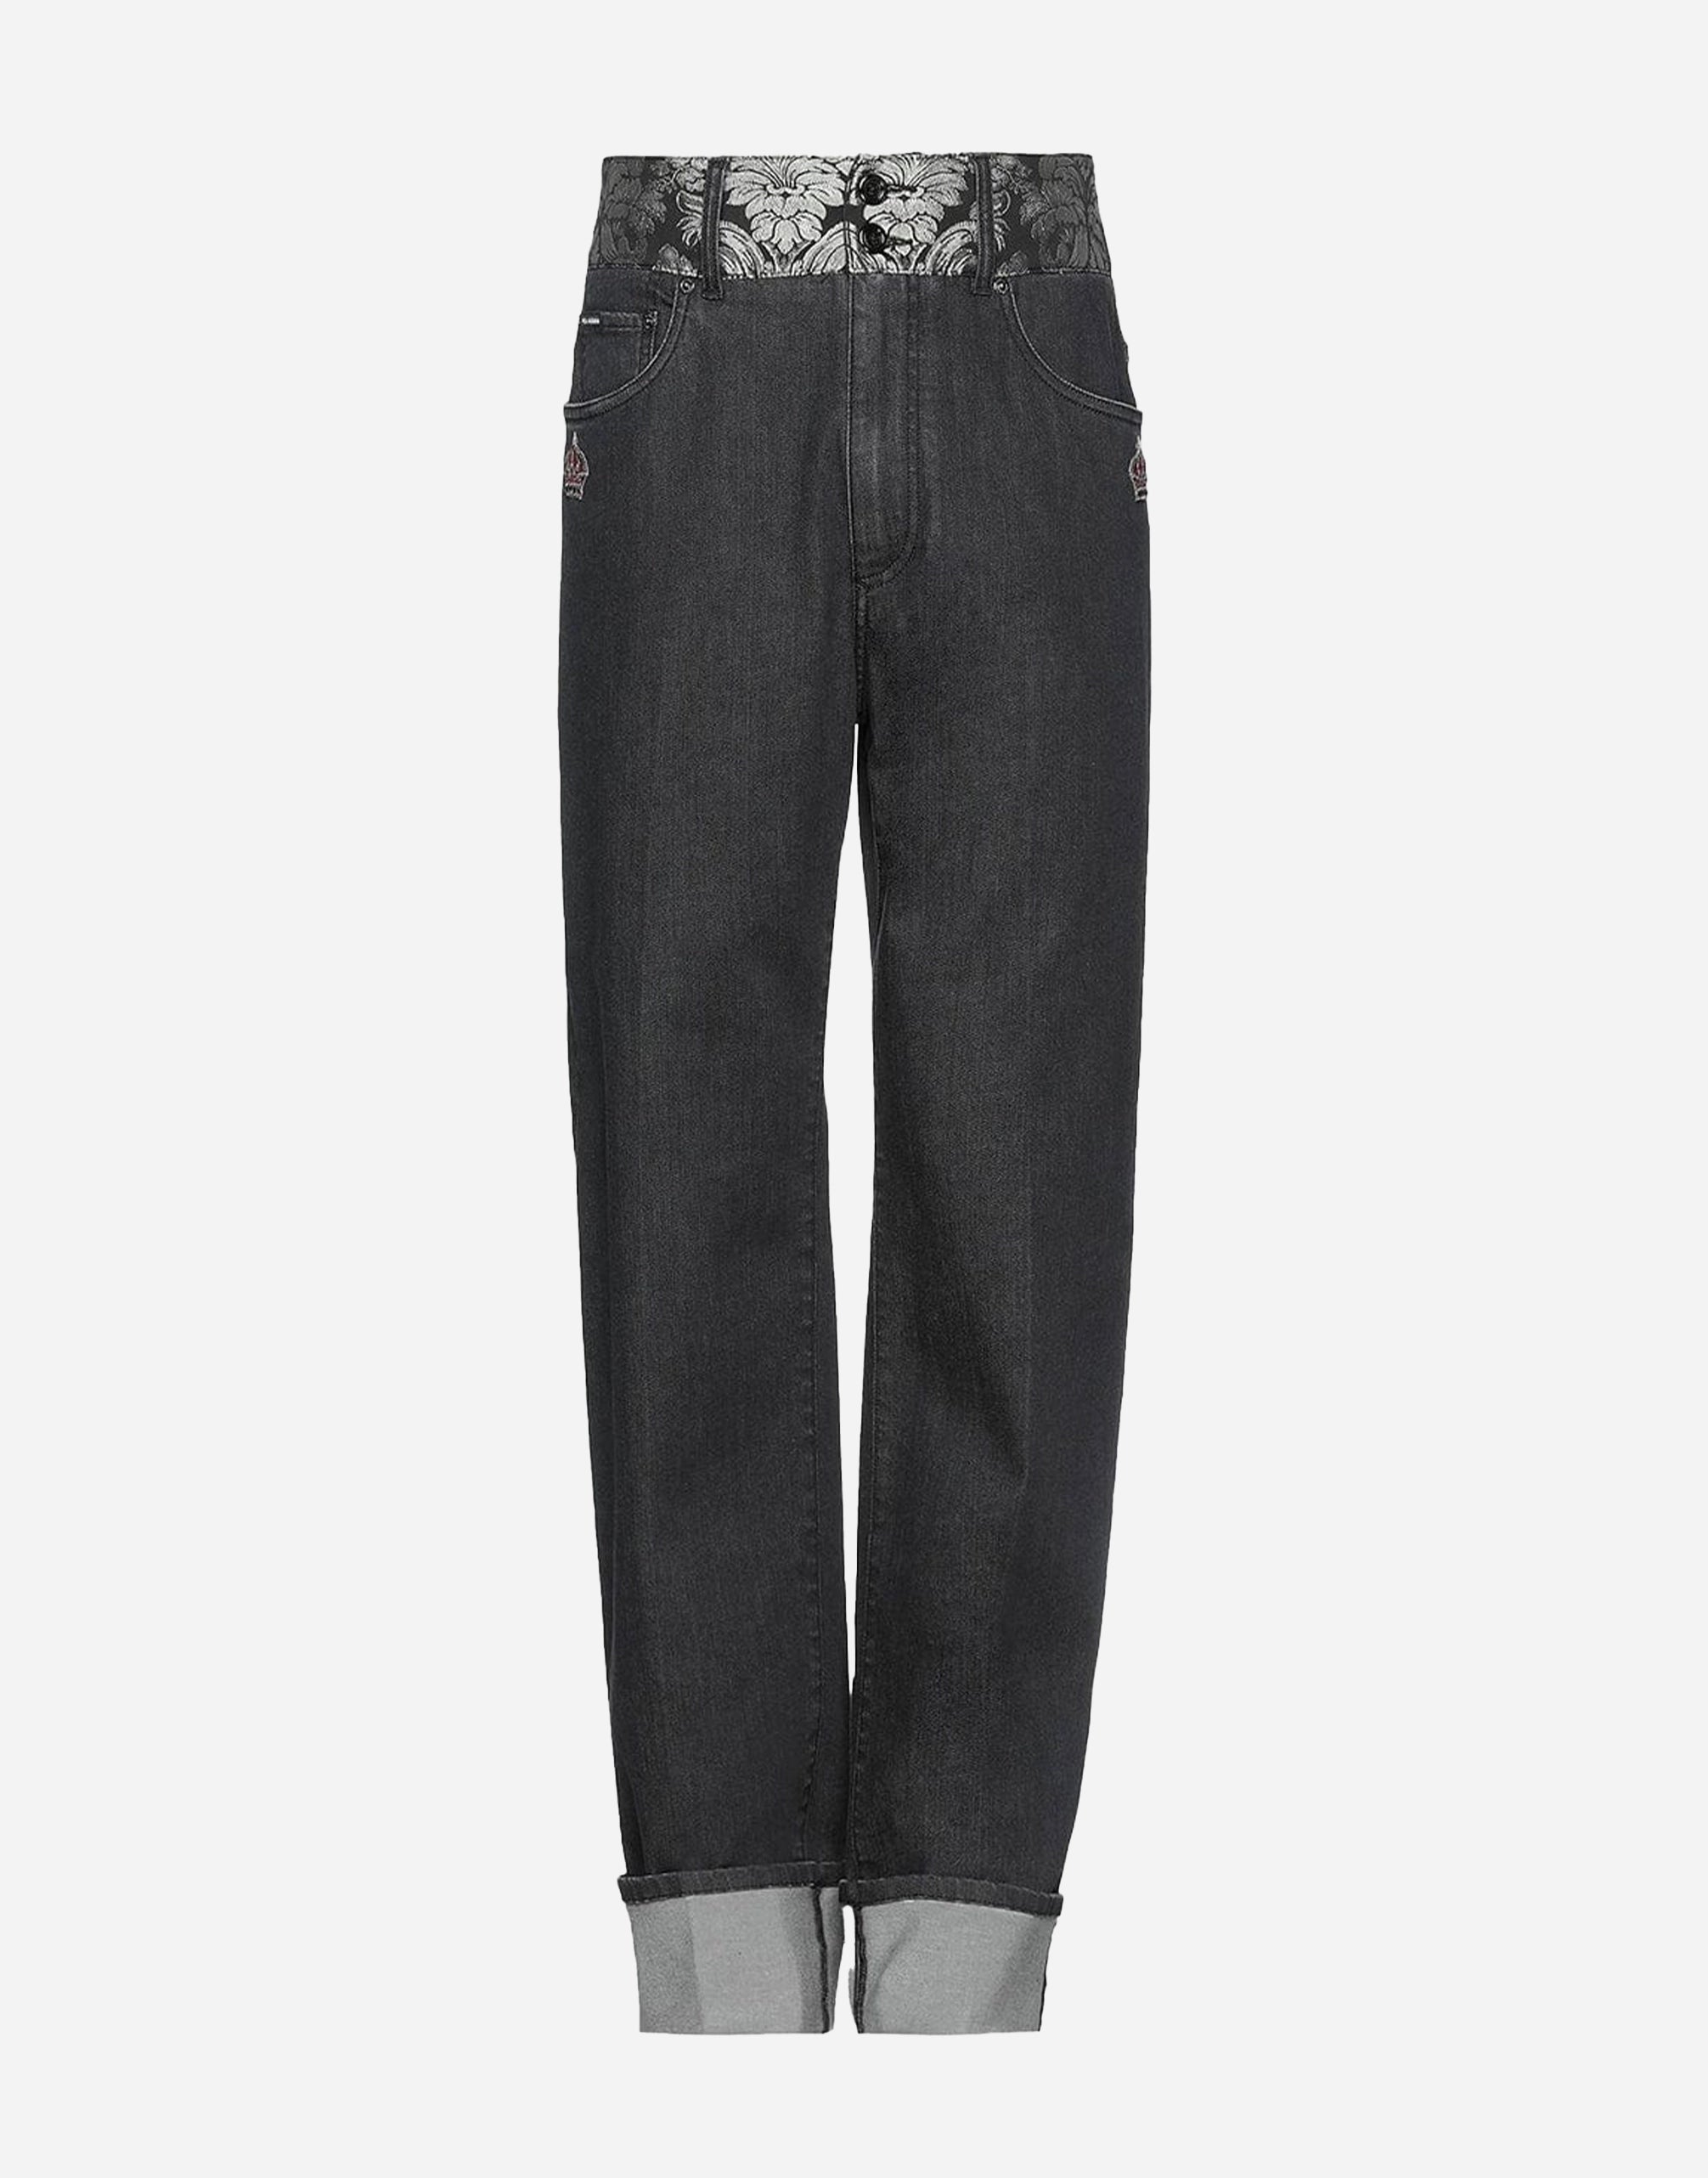 Dolce & Gabbana Jacquard Waist Denim Jeans